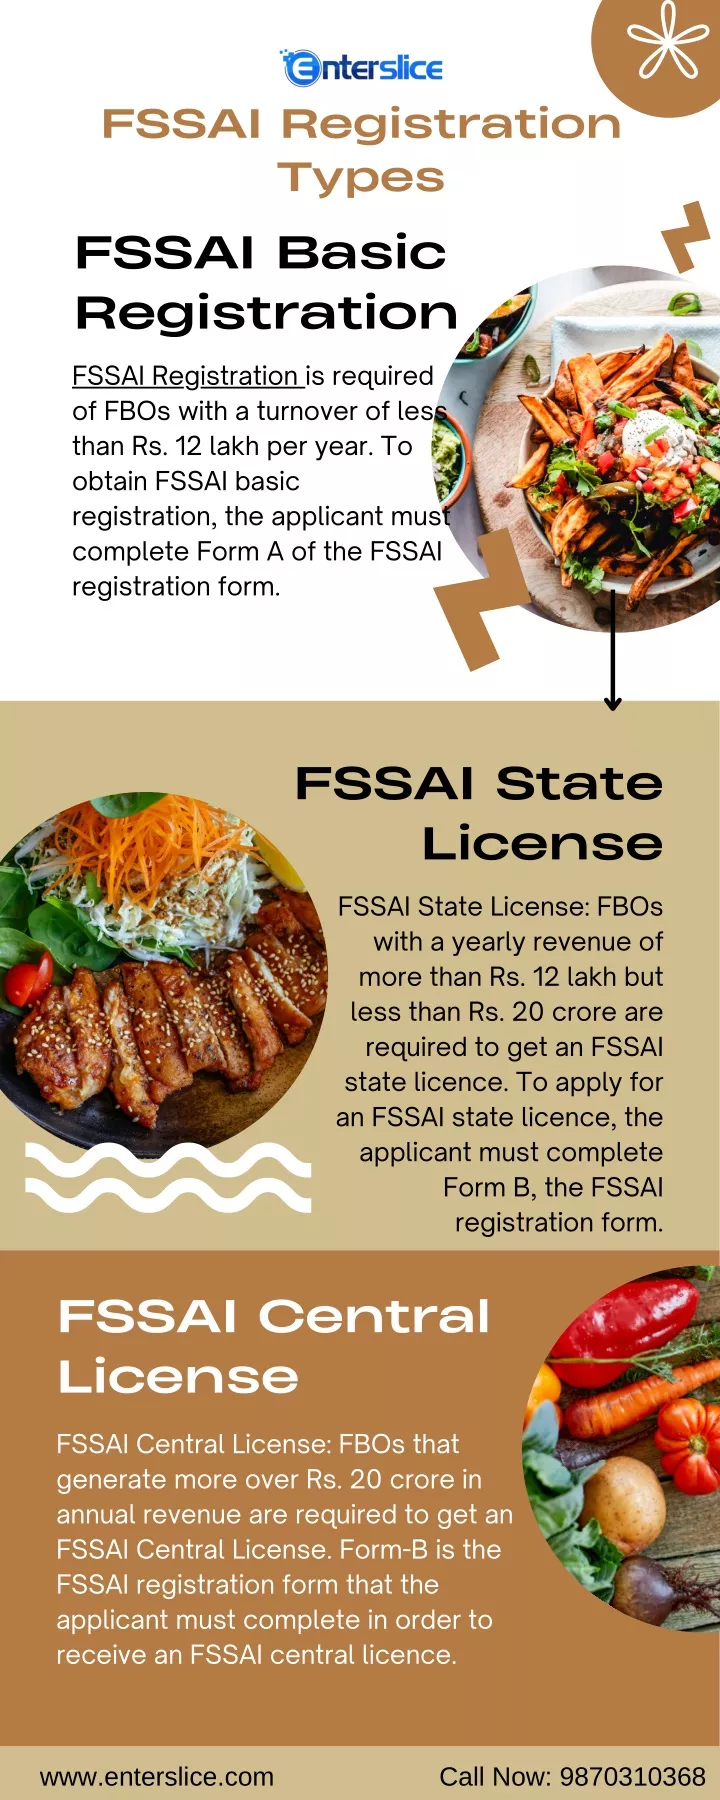 fssai registration types